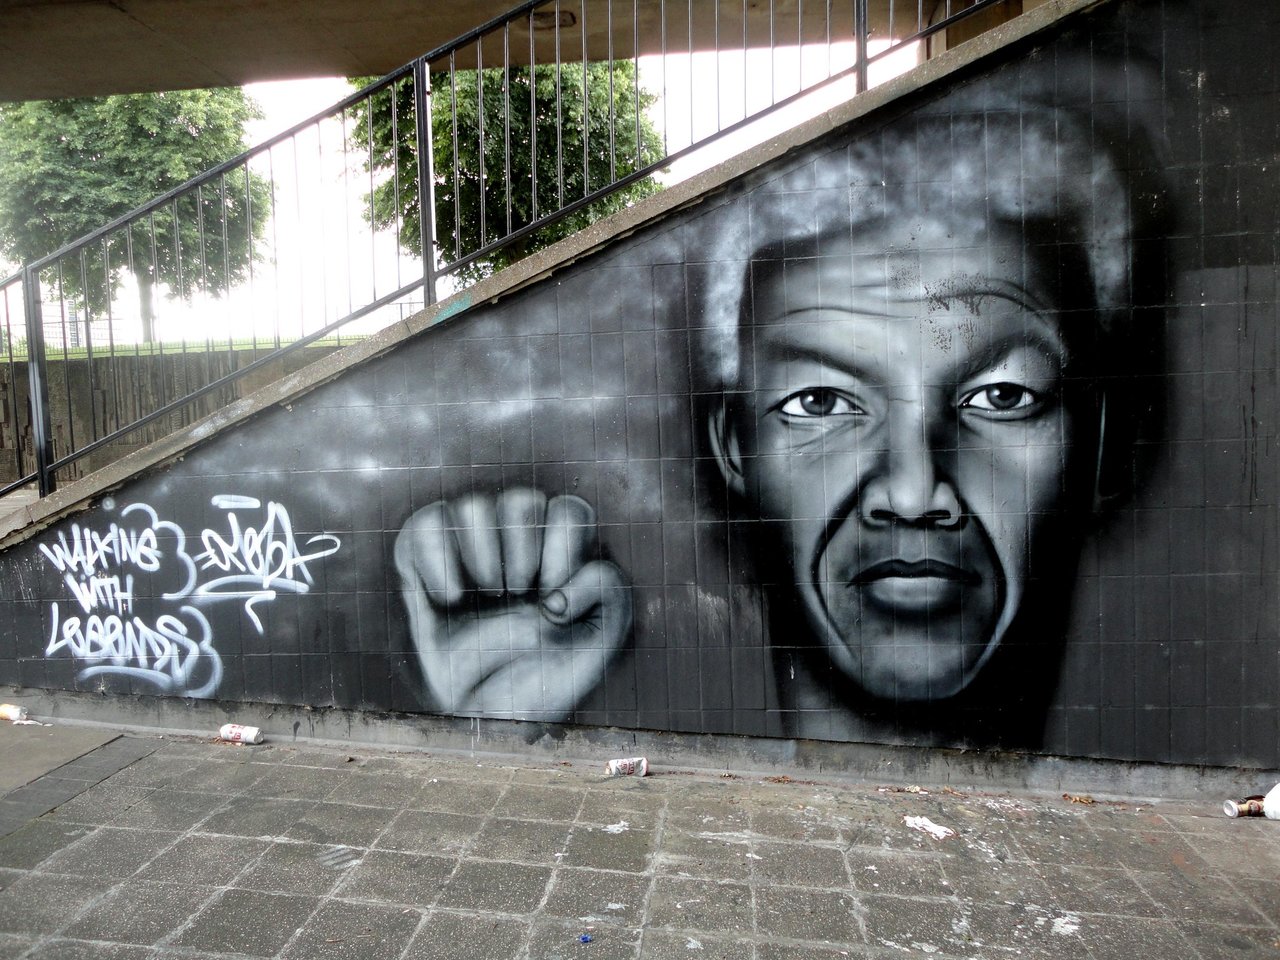 Mandela by Omega

#graffiti #graff #mural #subway #Birmingham #art #arte #streetart #tribute #madiba http://t.co/ifPIn9GHSO